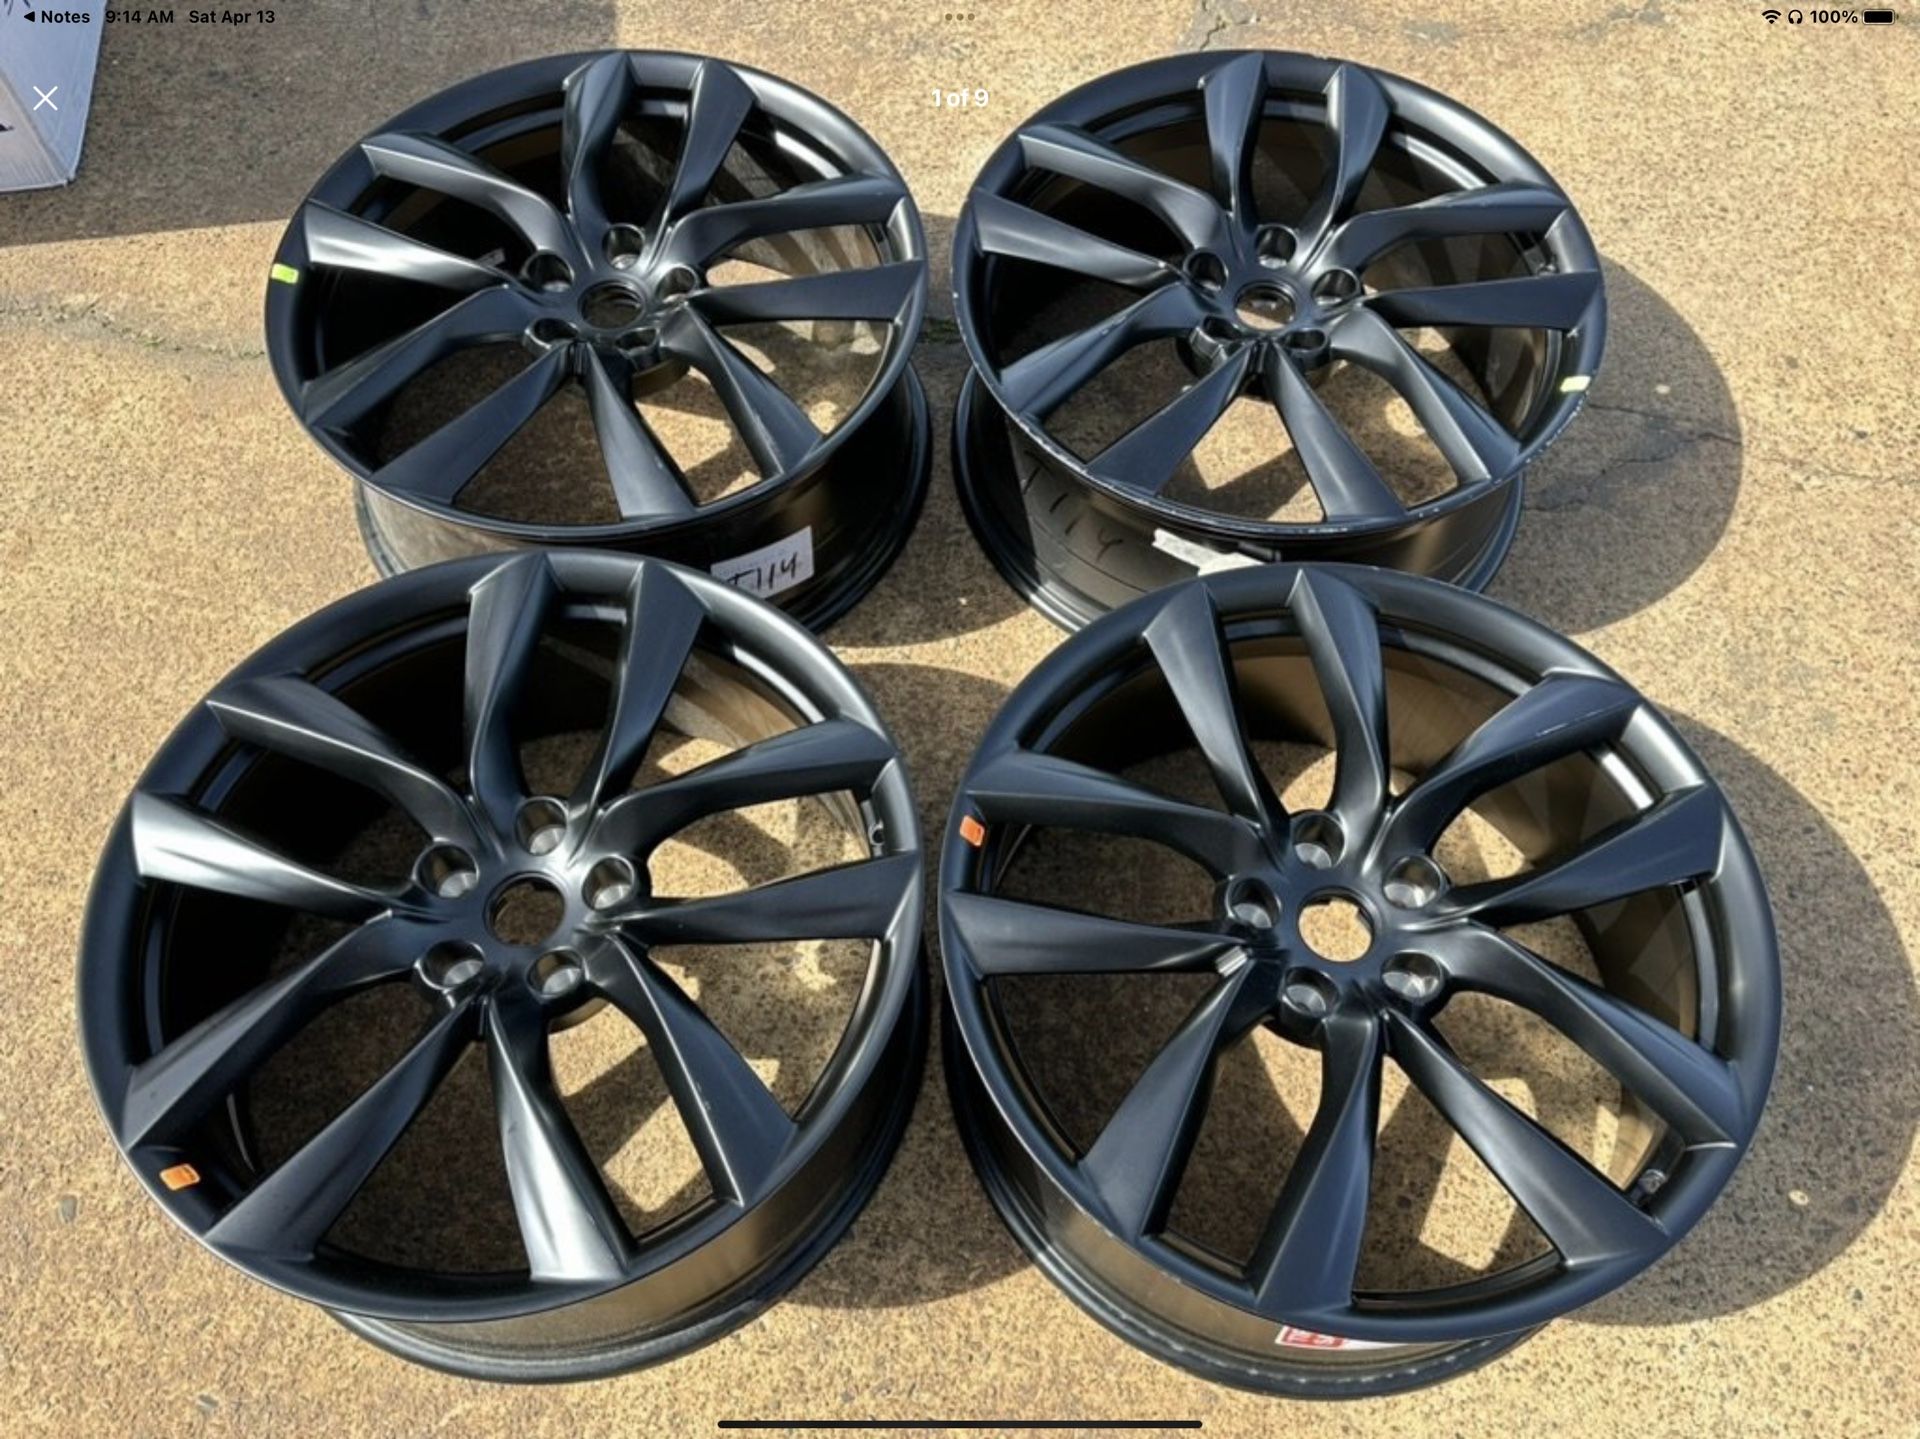 21" OEM 2020 Model S Arachnid Wheels P100D Rims Staggered Rims